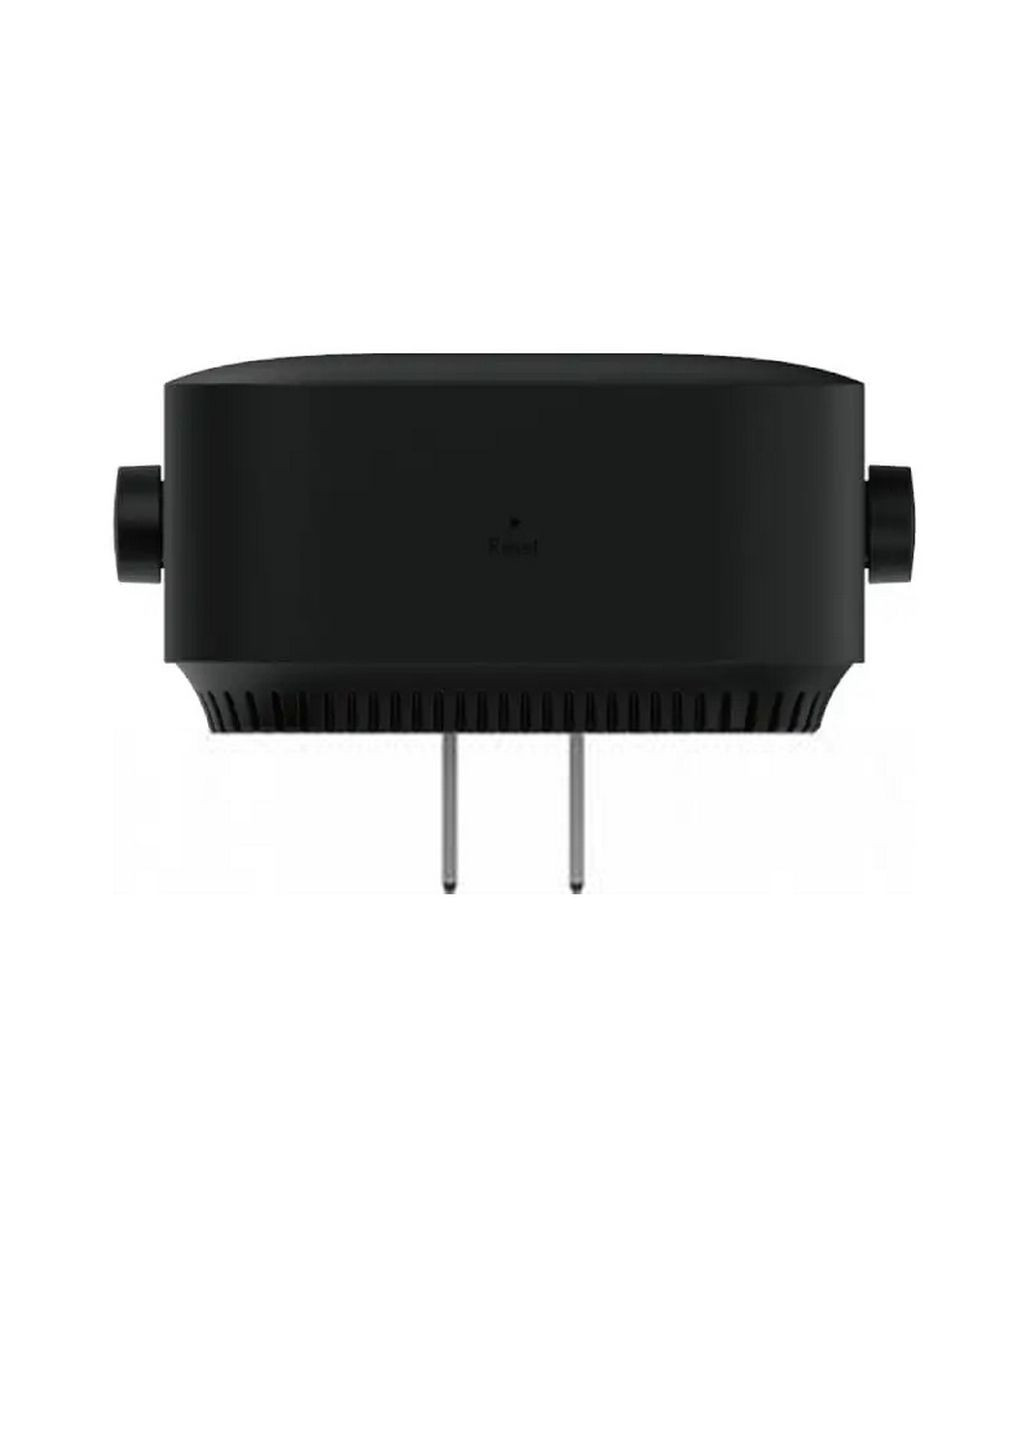 Ретранслятор Wi-Fi Mi WiFi Amplifier Pro (усилитель сигнала) Xiaomi (293415820)